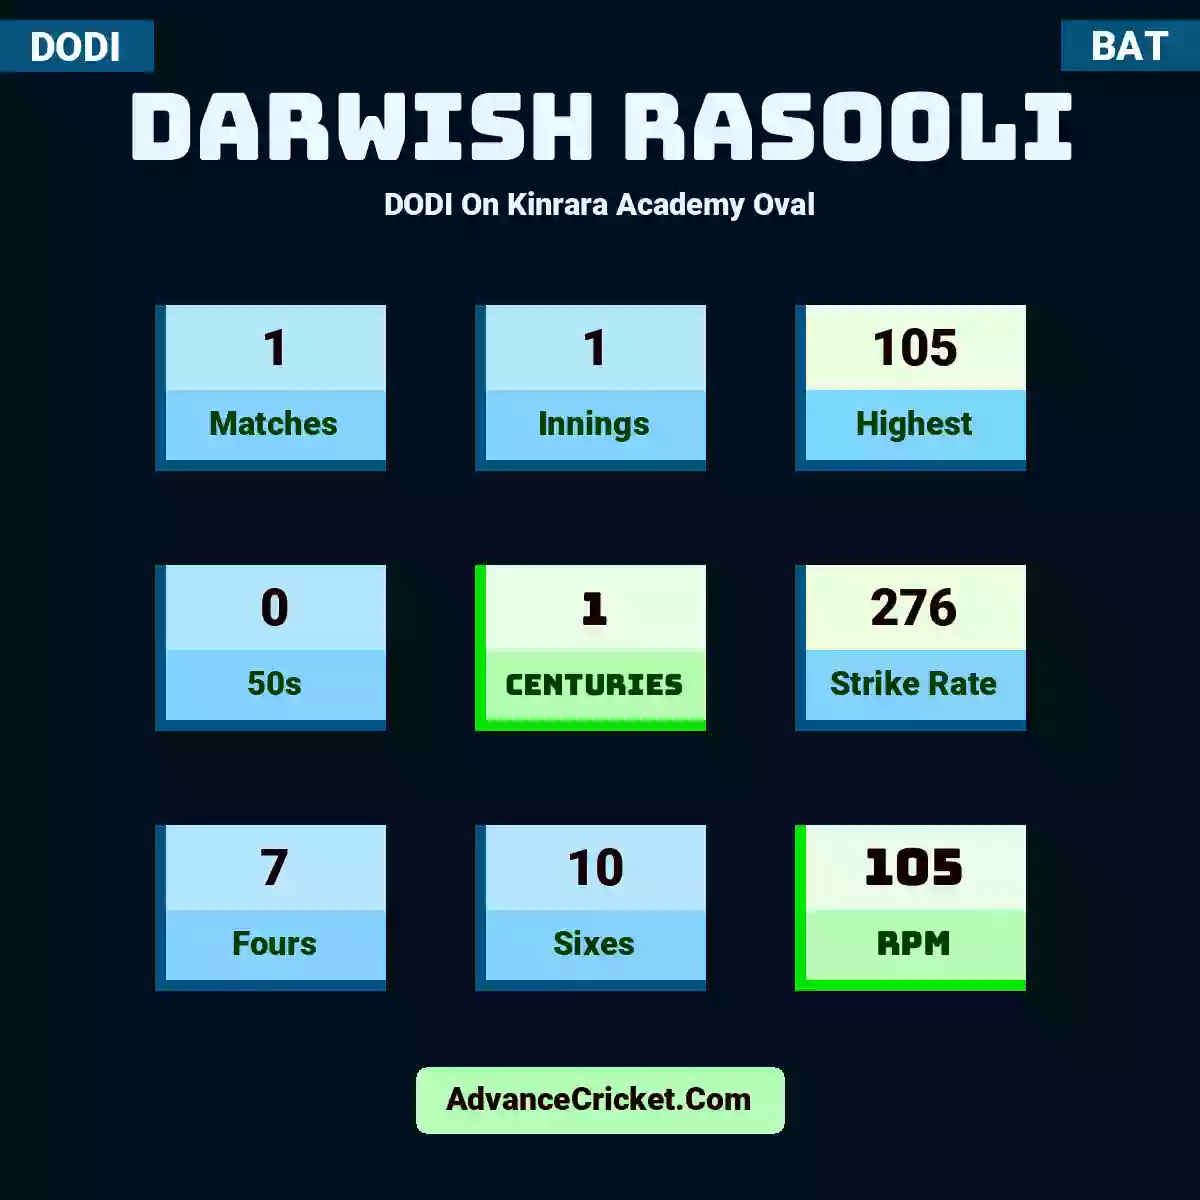 Darwish Rasooli DODI  On Kinrara Academy Oval, Darwish Rasooli played 1 matches, scored 105 runs as highest, 0 half-centuries, and 1 centuries, with a strike rate of 276. D.Rasooli hit 7 fours and 10 sixes, with an RPM of 105.